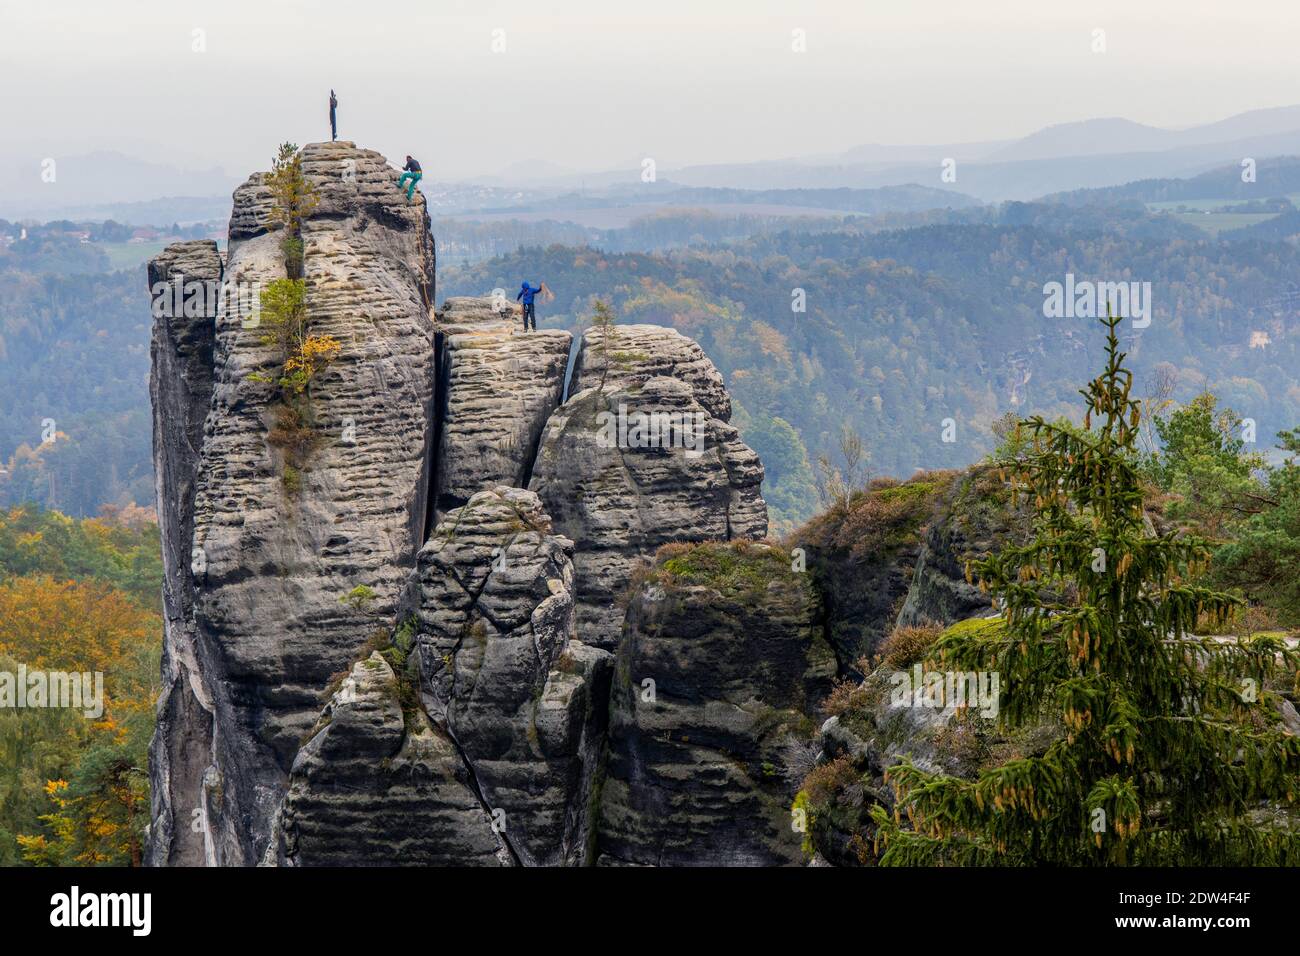 arrampicata su una roccia al neurathen felsenburg e il famoso ponte di bastei nel parco nazionale sächsische schweiz, svizzera sassone, germania orientale elbsandsteinge Foto Stock